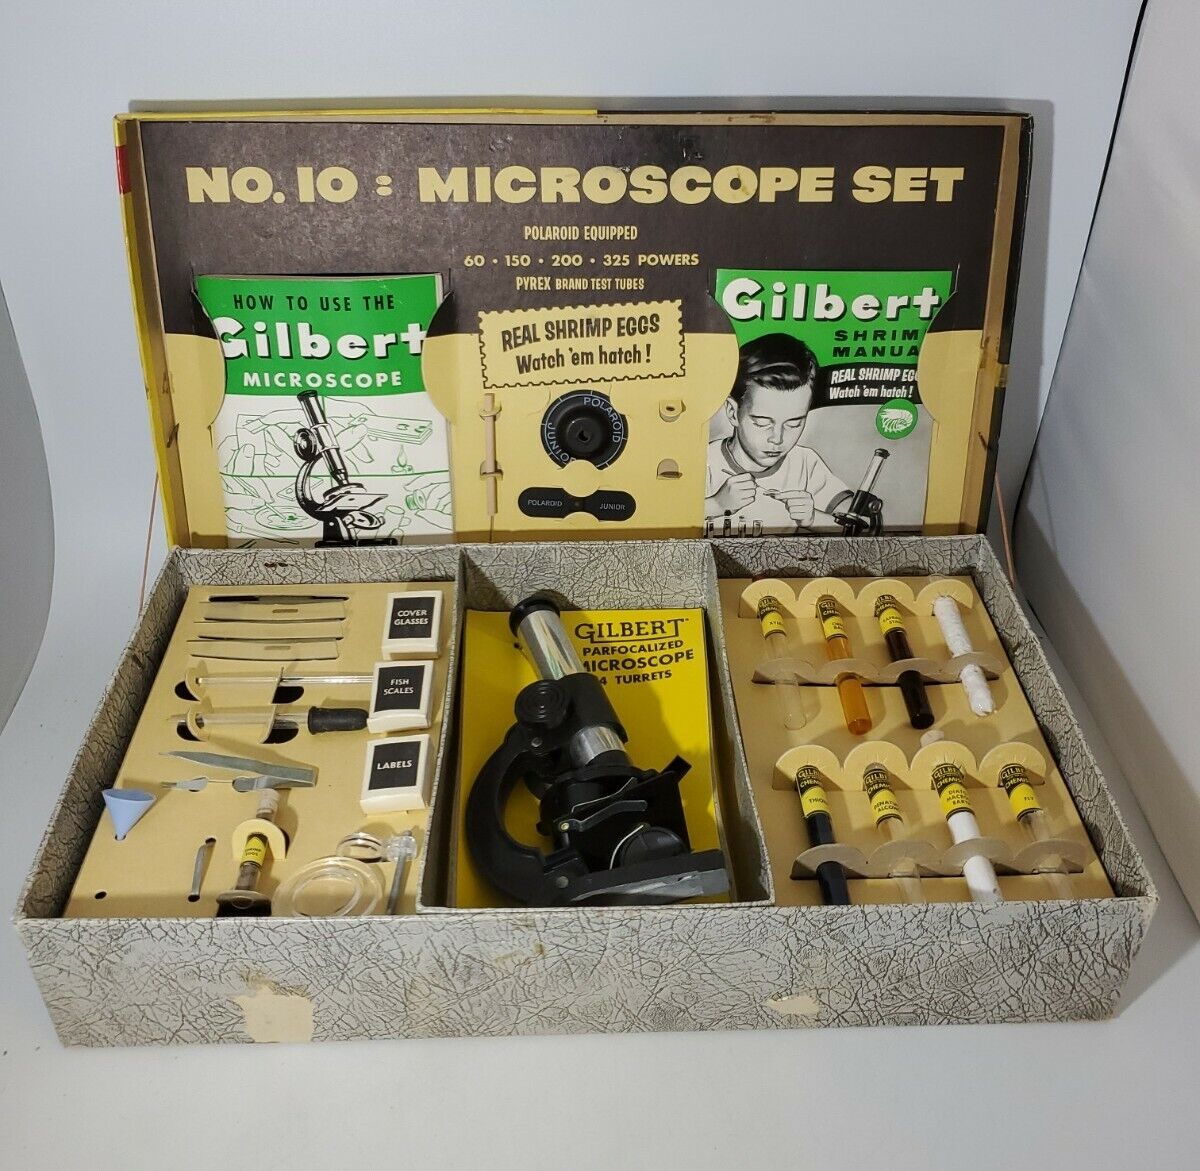 VINTAGE GILBERT MICROSCOPE SET NO 10 WITH POLAROID JUNIOR IN ORIGINAL BOX